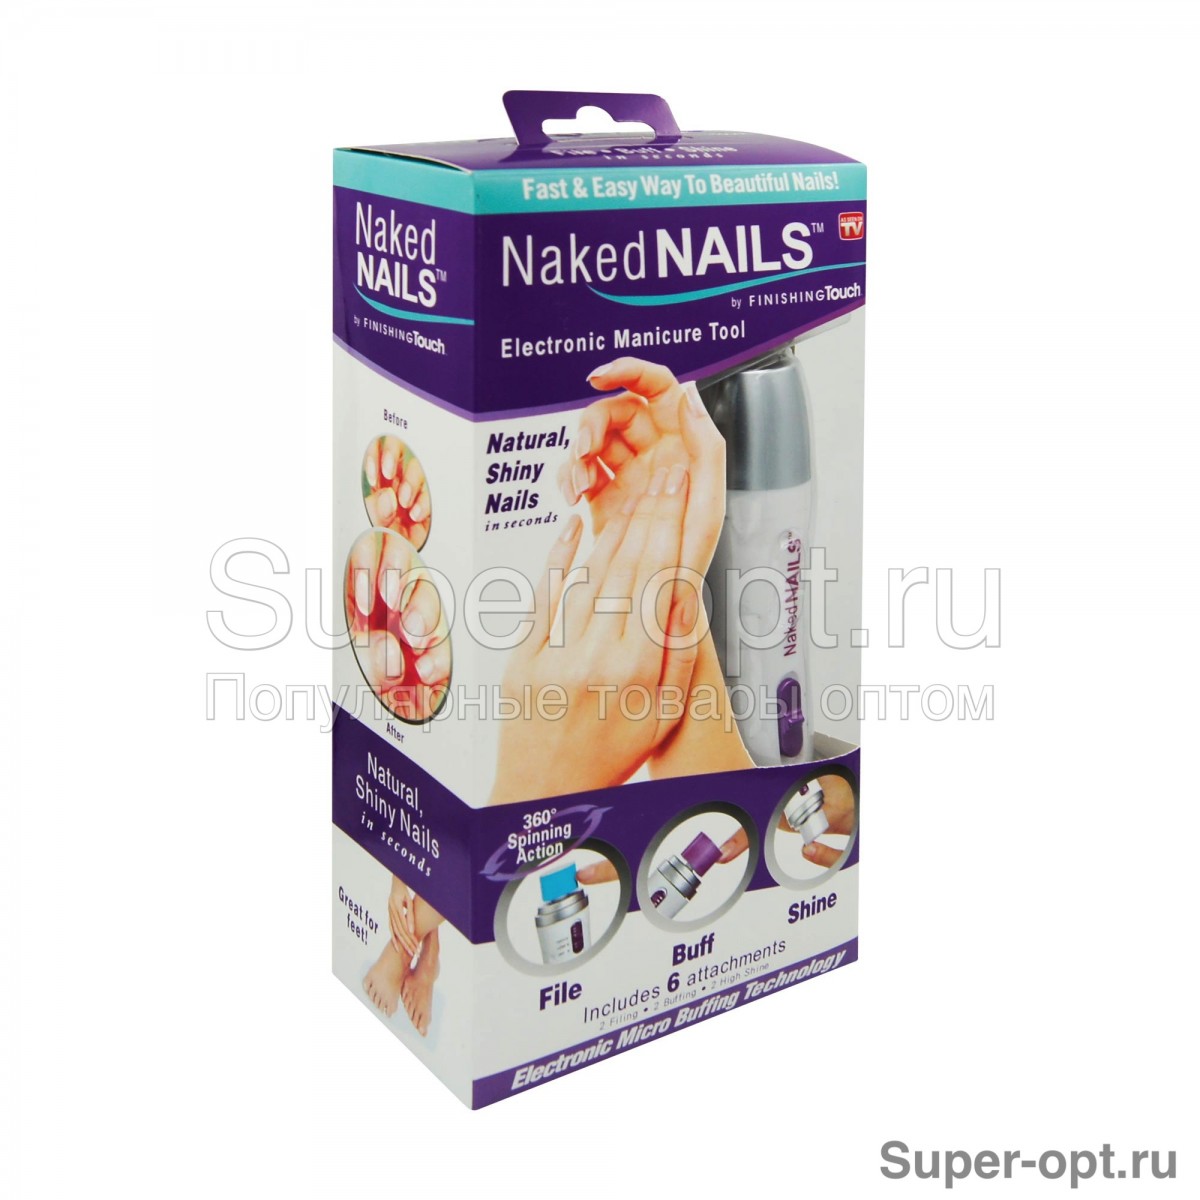 Прибор для маникюра Naked Nails